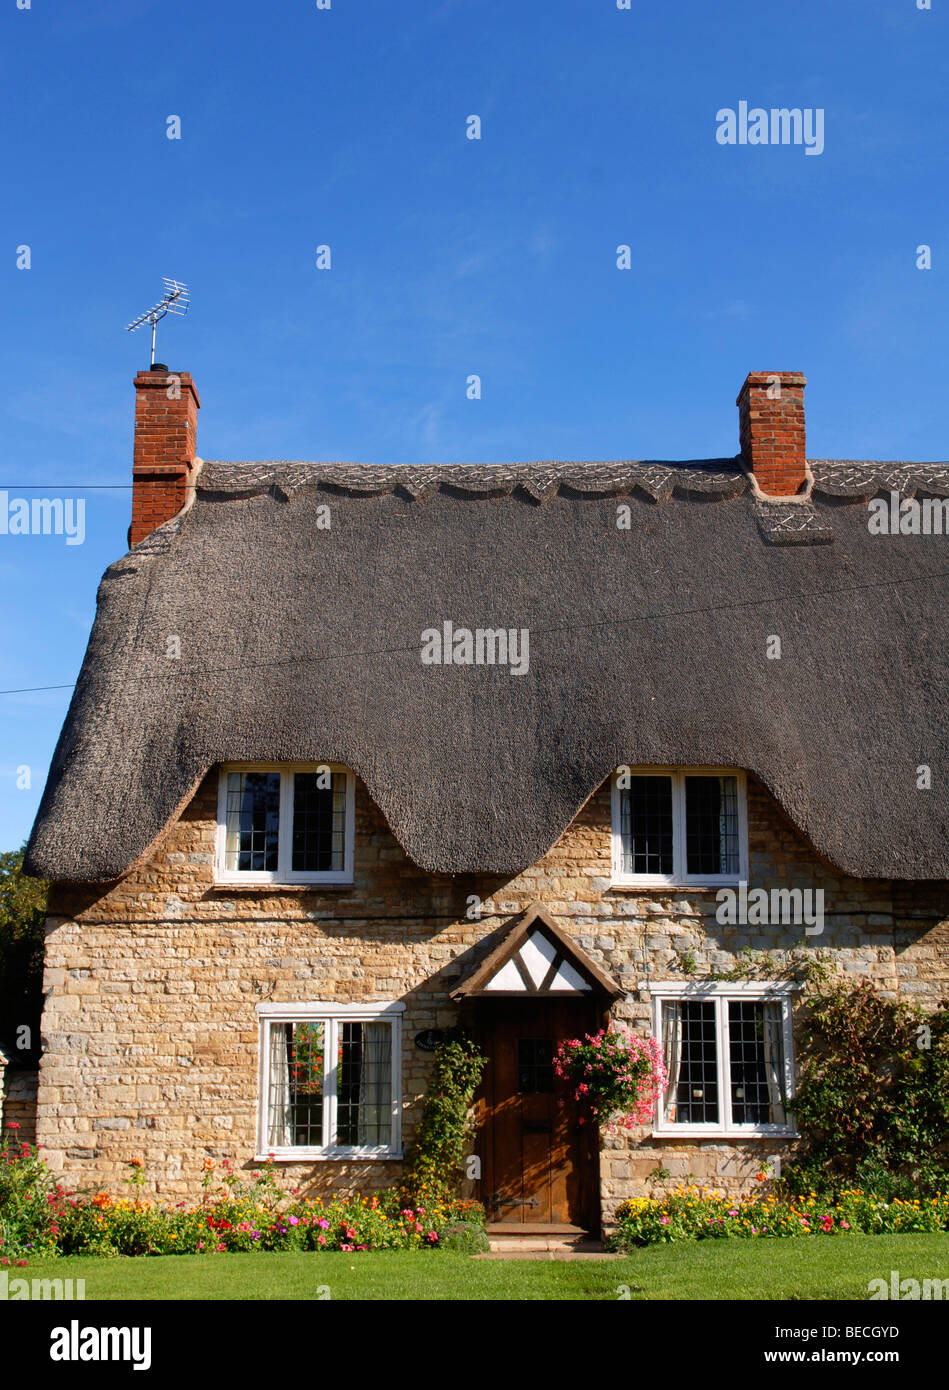 Old thatched English house, Tredington, England, Europe Stock Photo